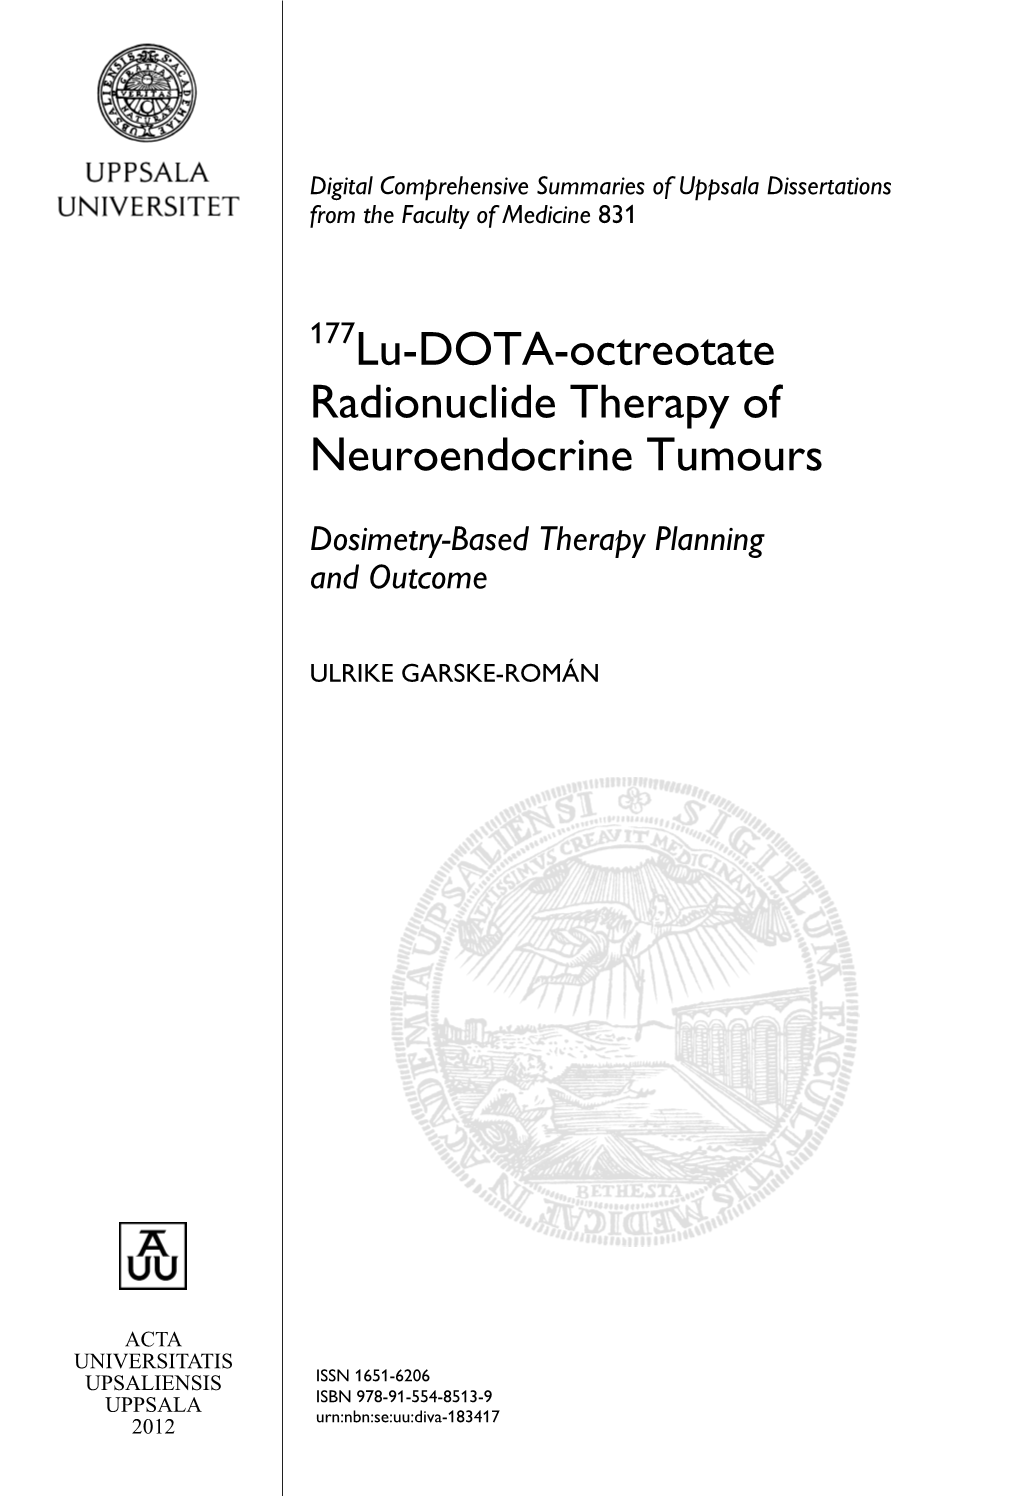 177Lu-DOTA-Octreotate Radionuclide Therapy of Neuroendocrine Tumours